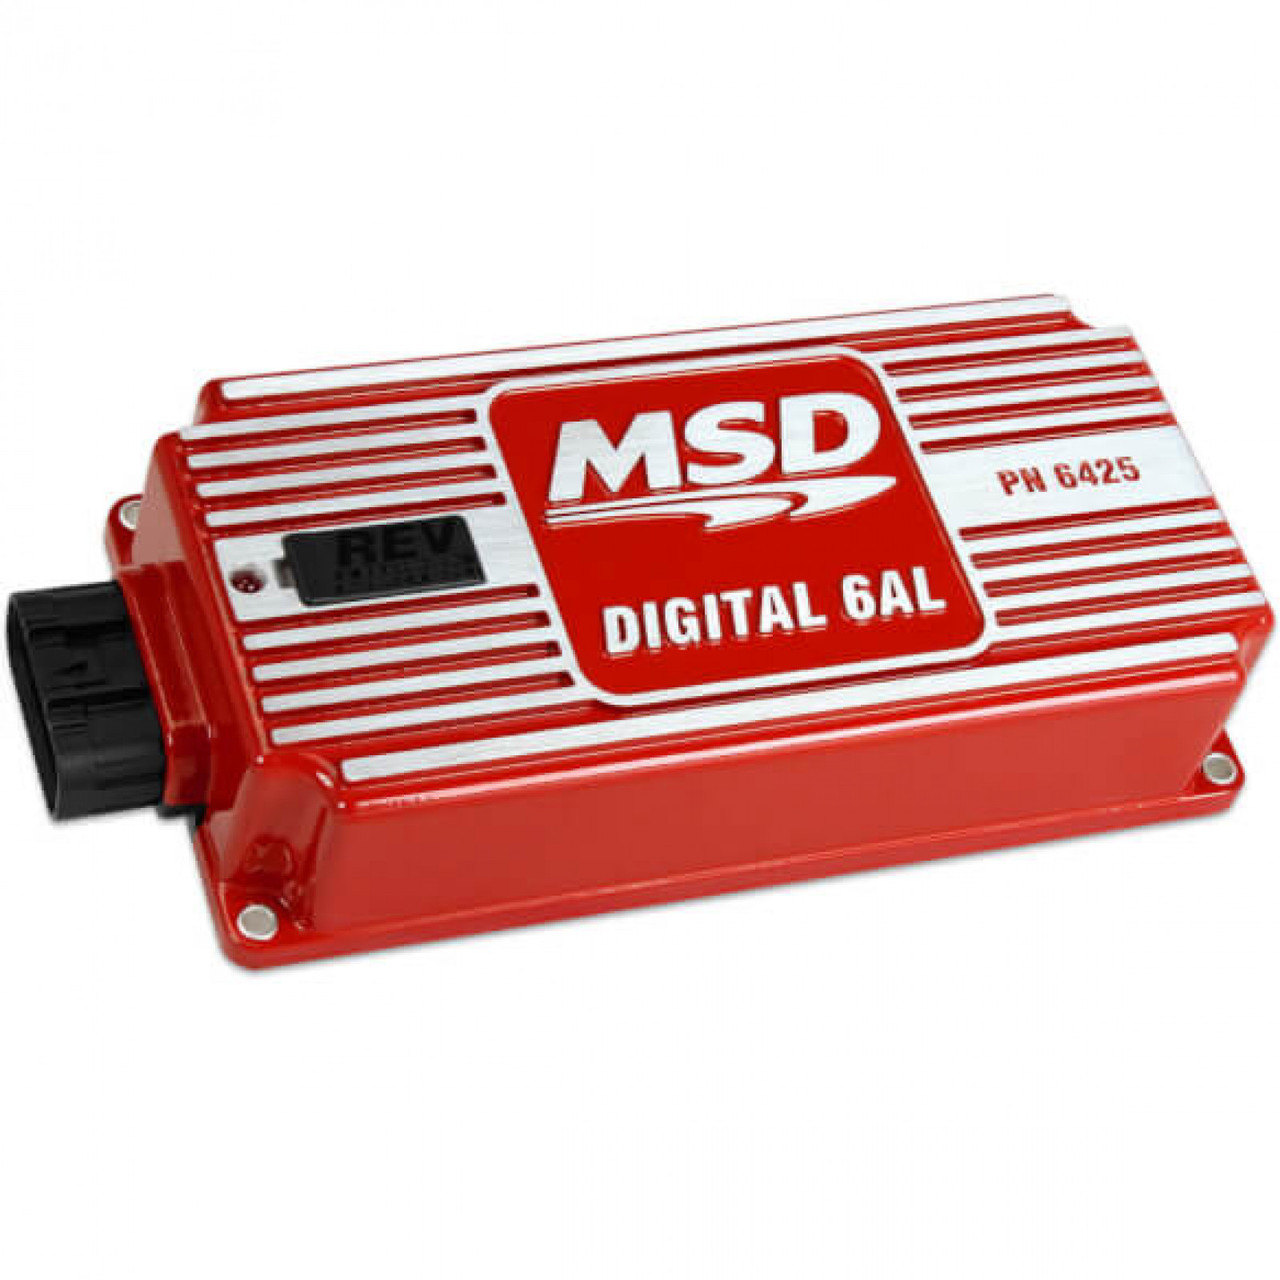 MSD Digital 6AL Ignition Control - Red (MSD-26425)